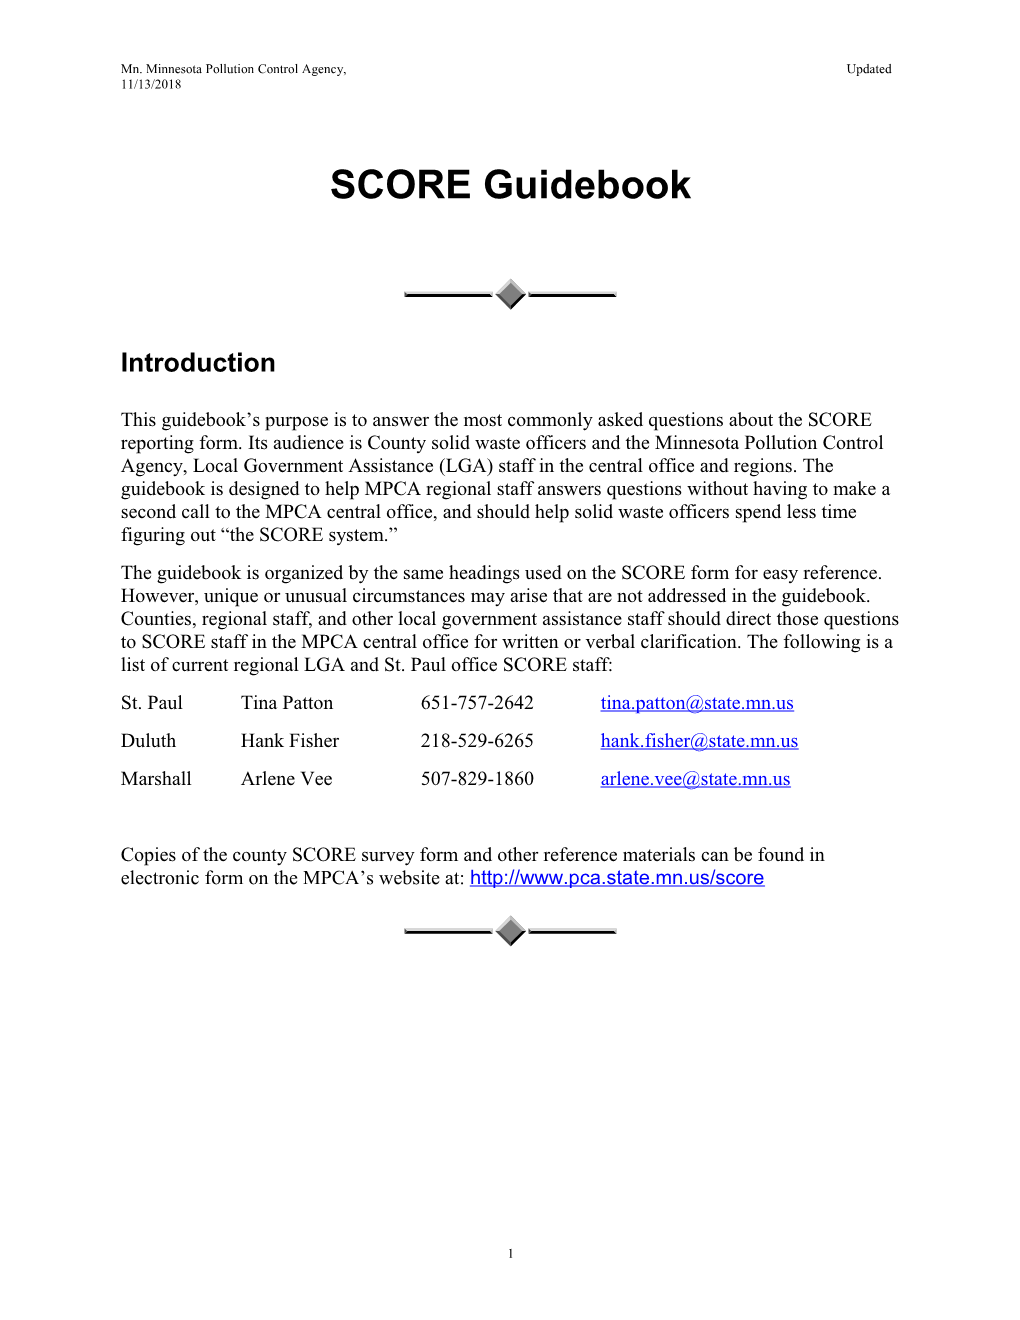 SCORE Guidebook, Second Draft